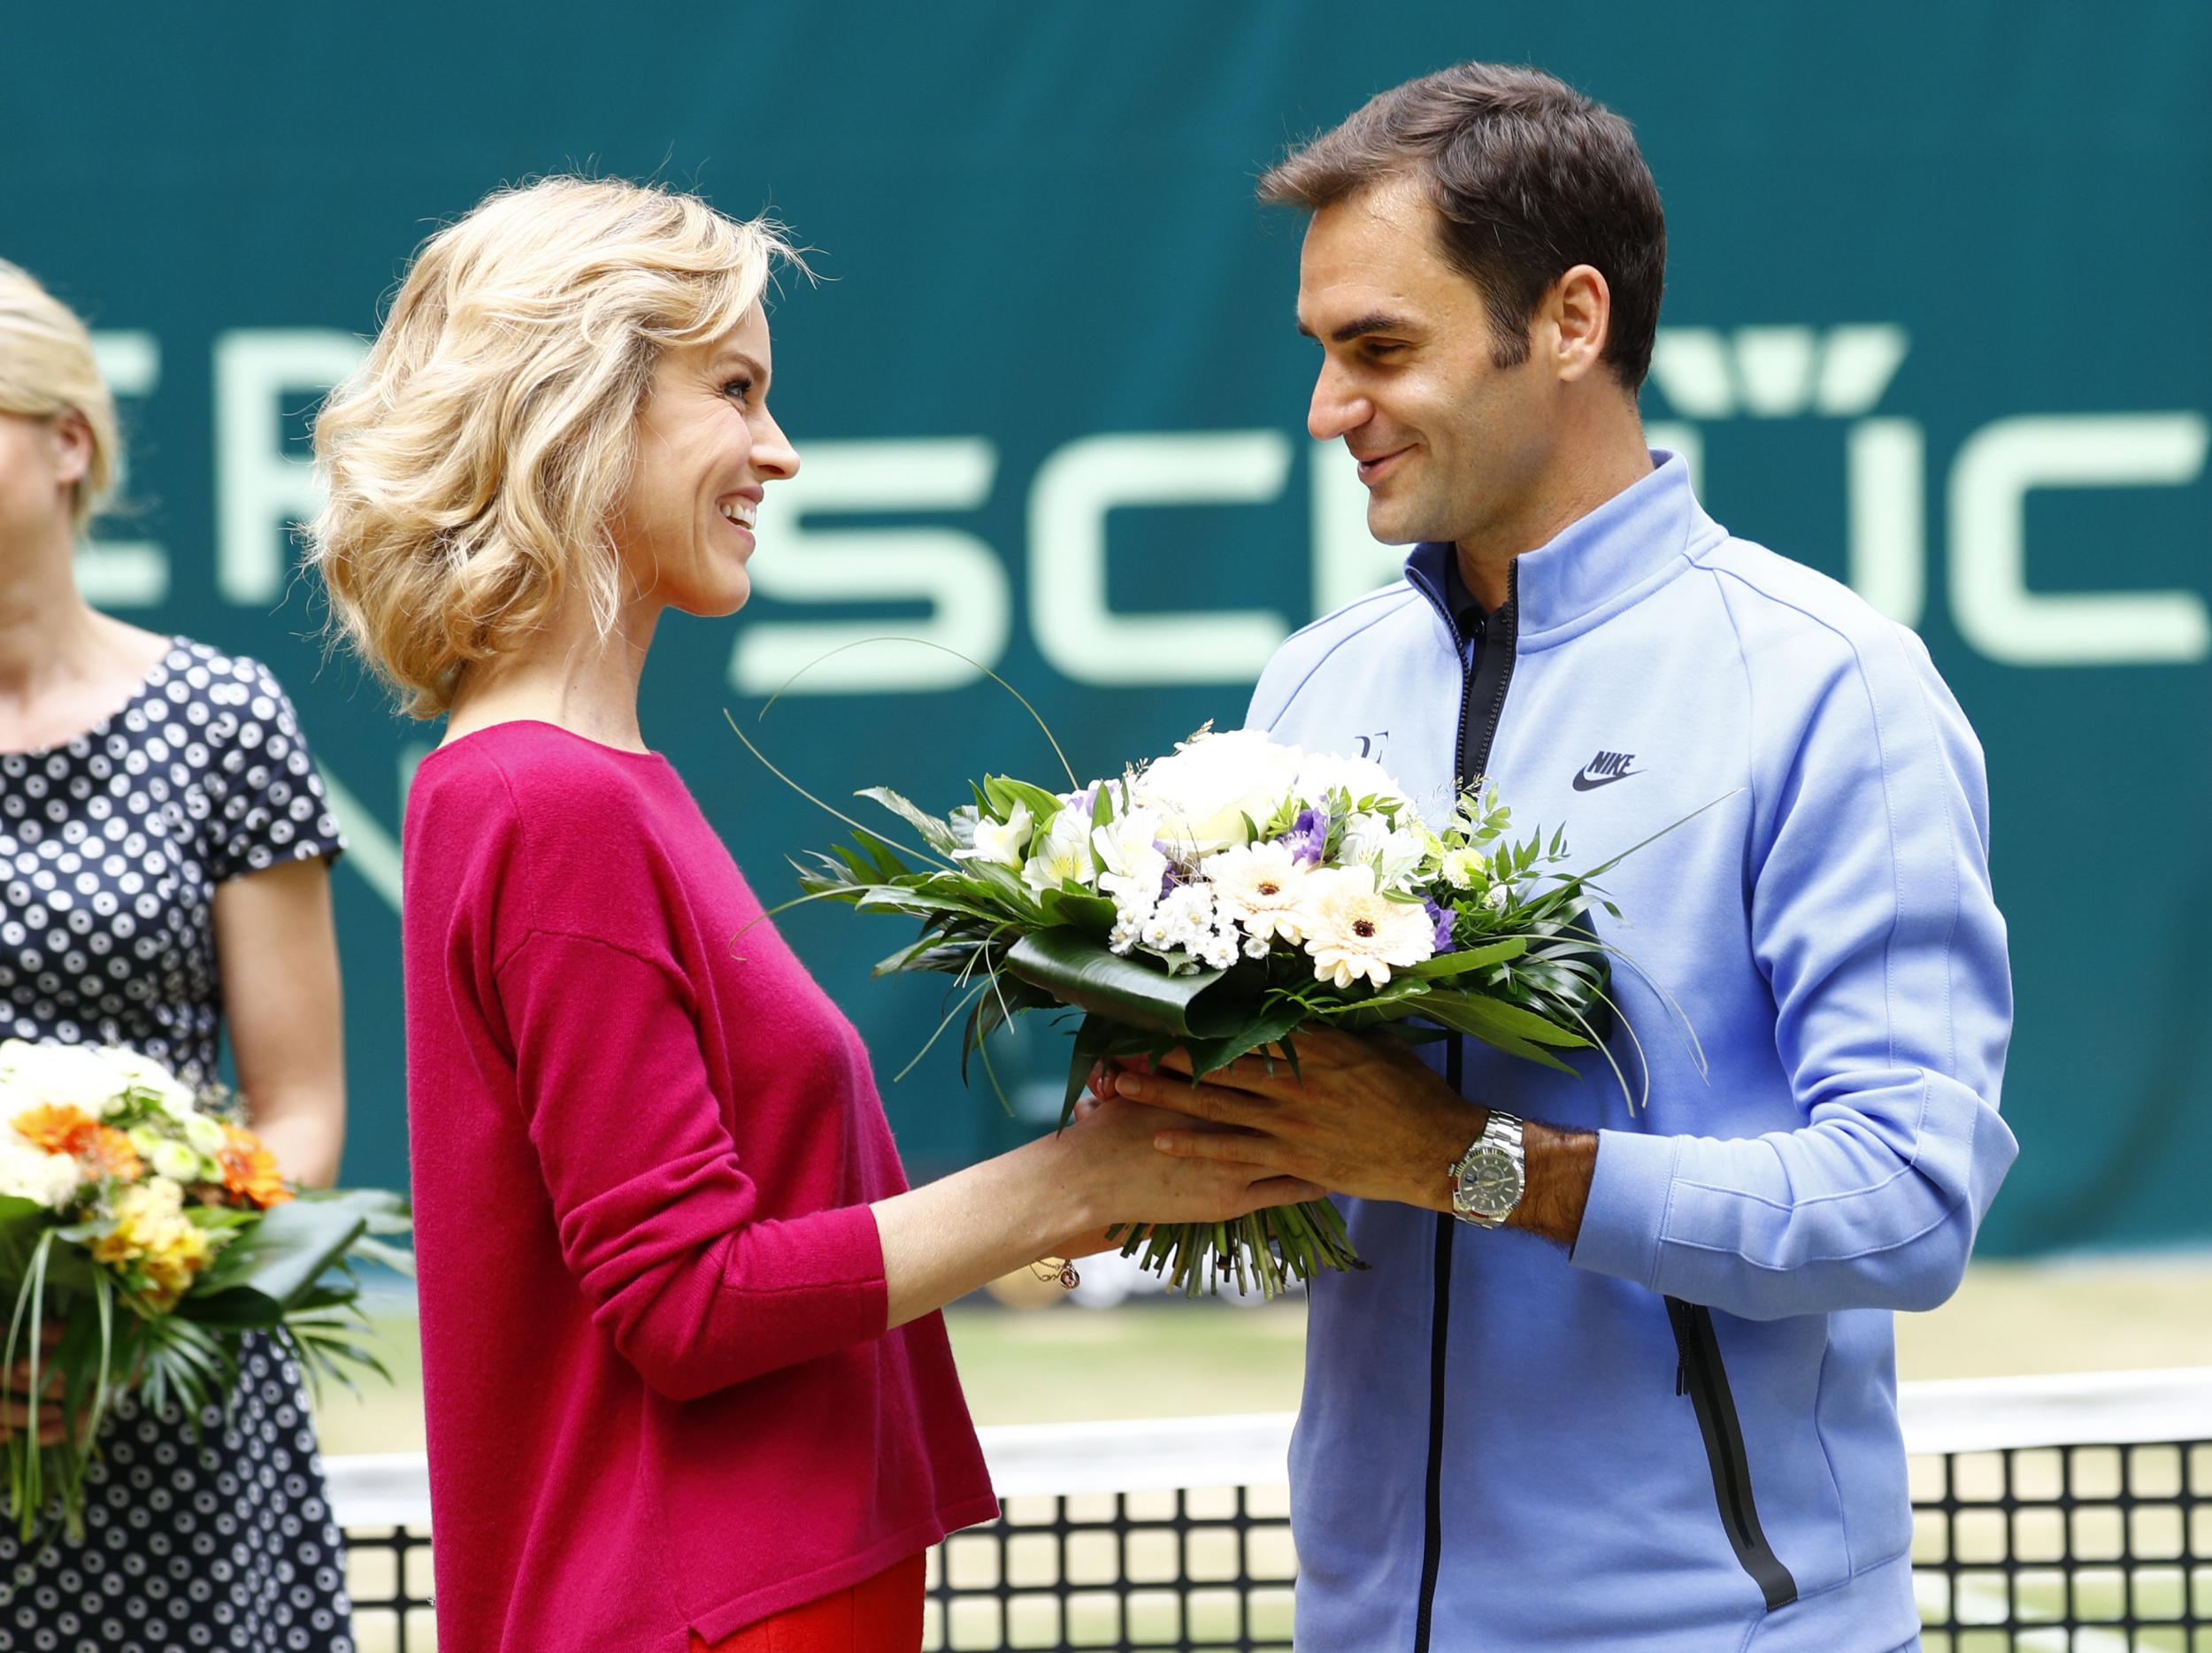 &#13;
Federer recently won his ninth Halle title &#13;